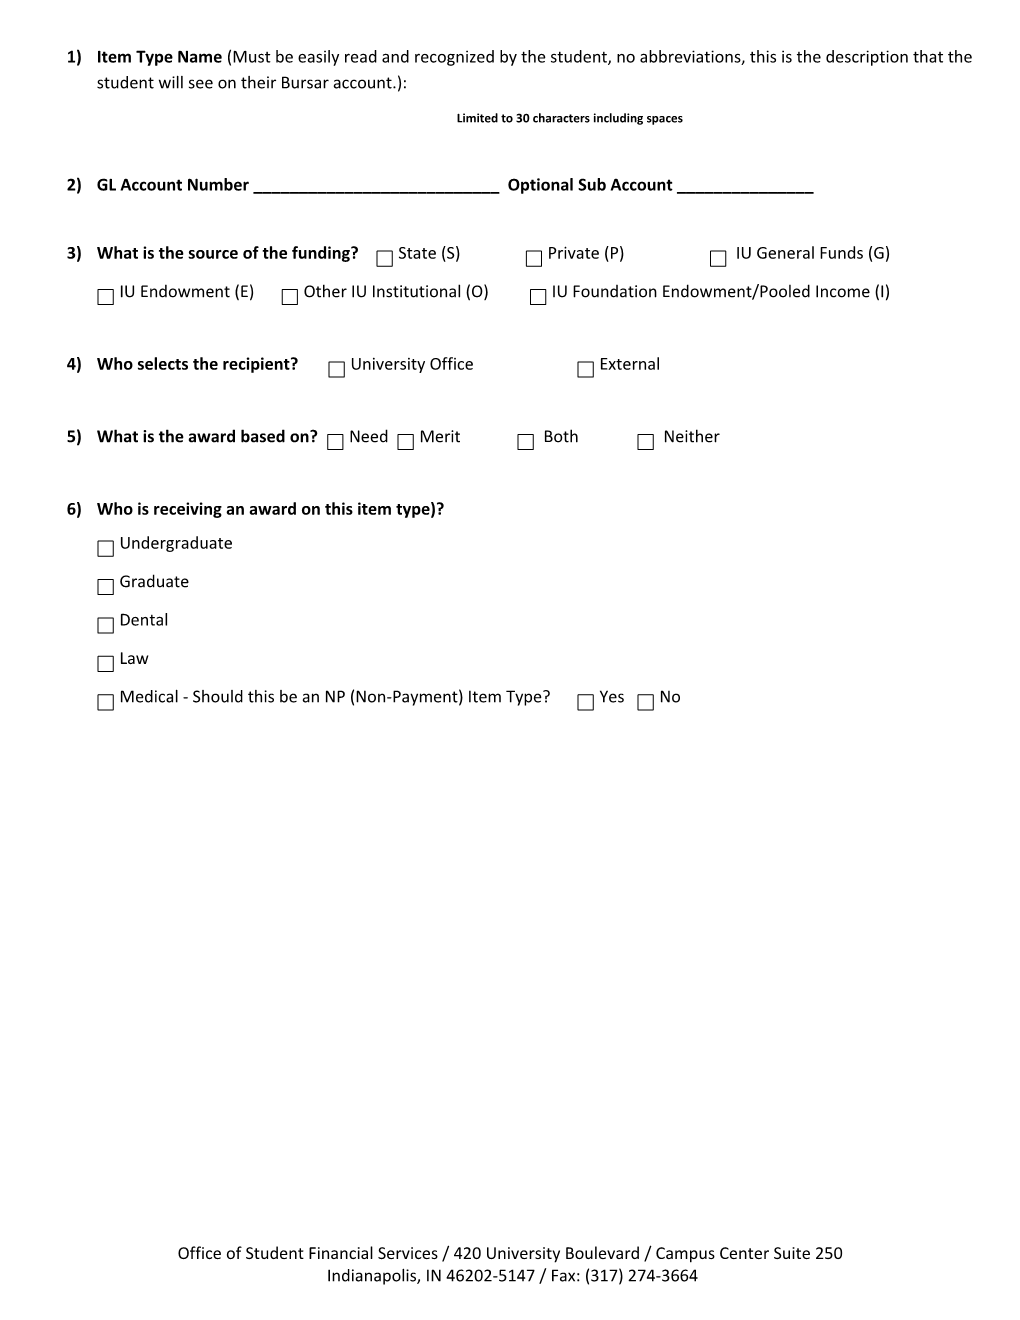 Item Type Request Form